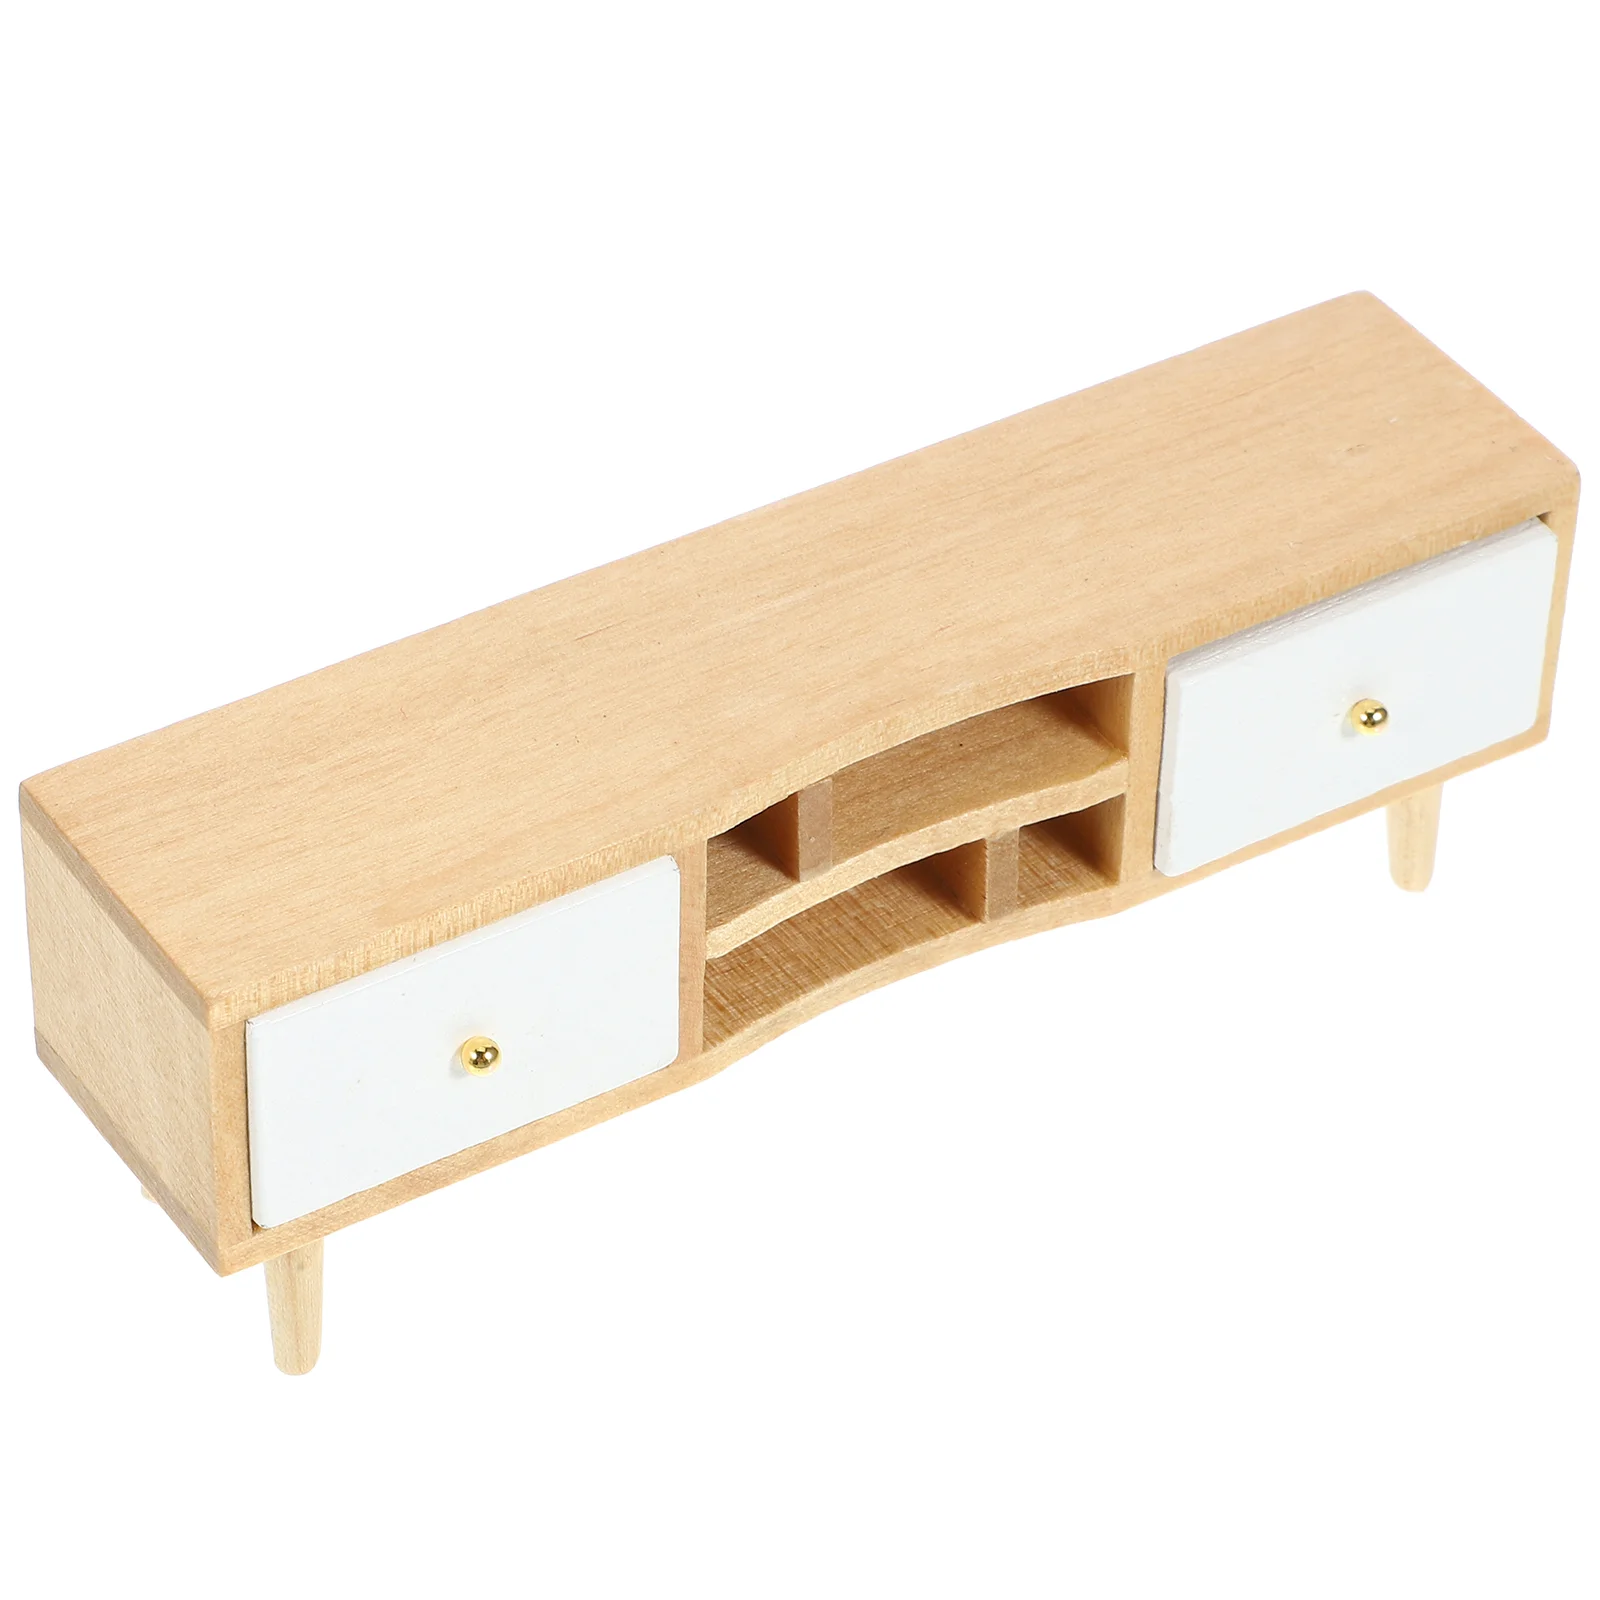 

Cabinet Furniture Realistic Mini Stand Miniature House Supply Decor Wooden Delicate